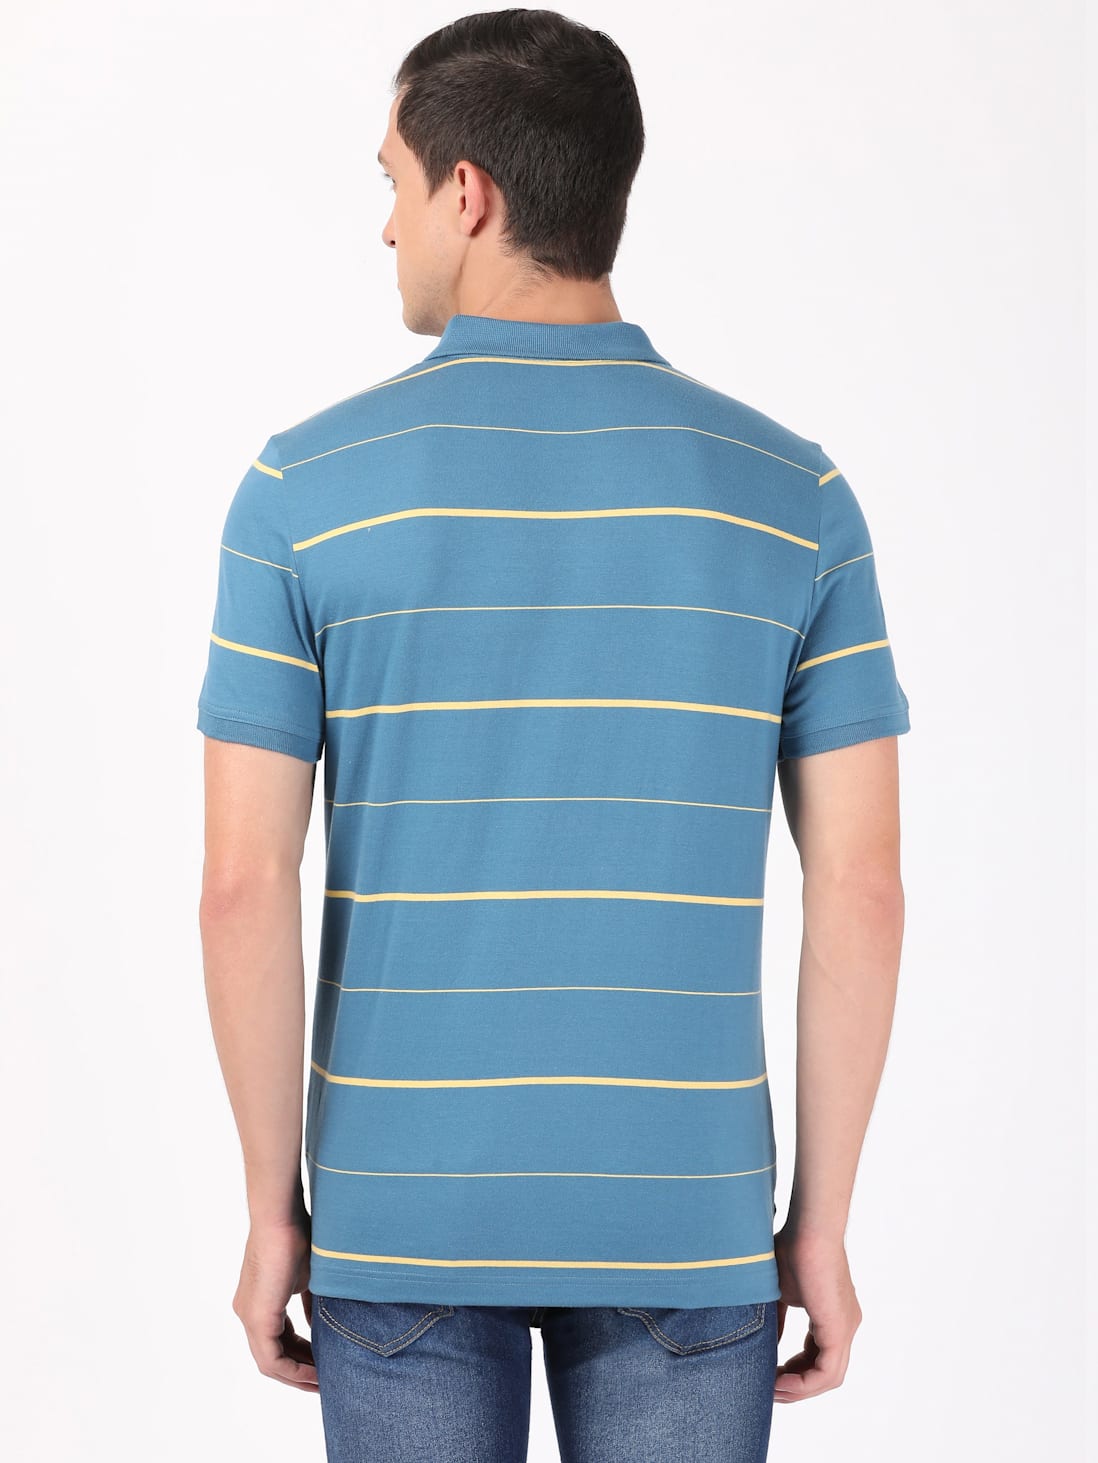 Buy Stellar/Corn Silk Polo T-Shirt for Men UM15 | Jockey India